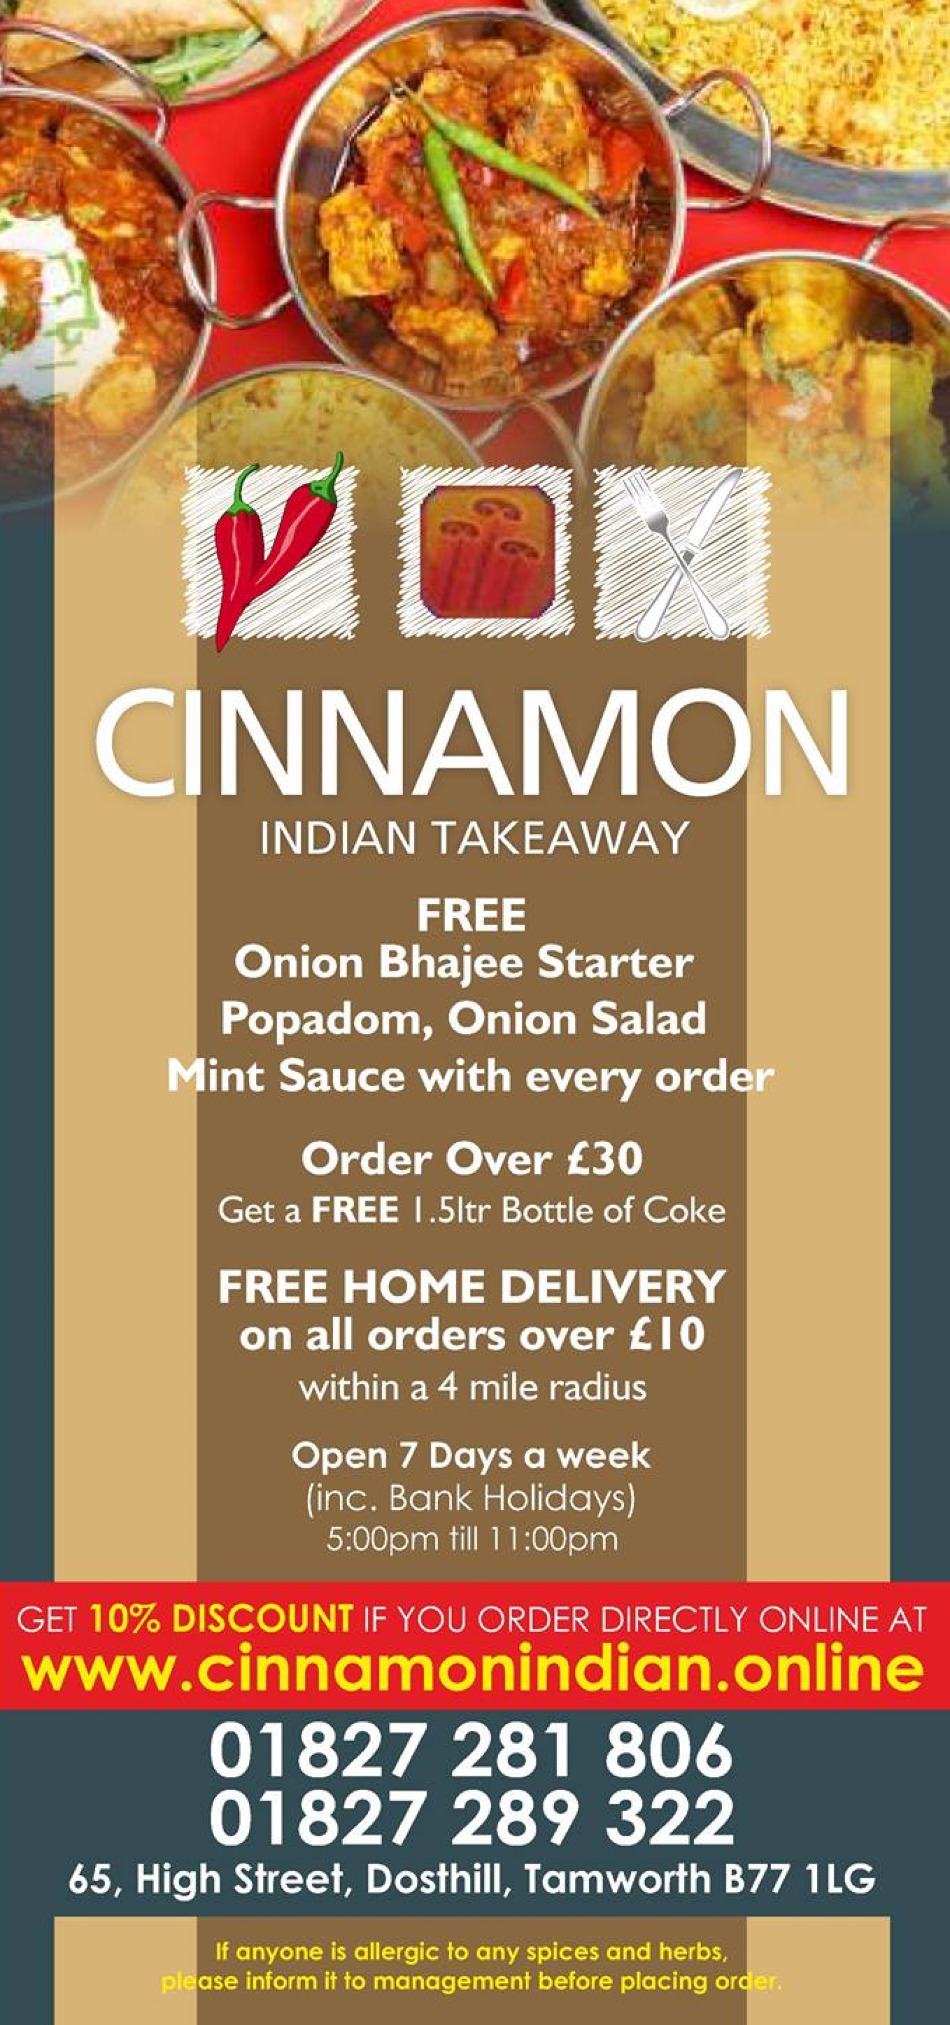 Takeaway Restaurant Menu Page - Cinnamon Indian Takeaway - Tamworth